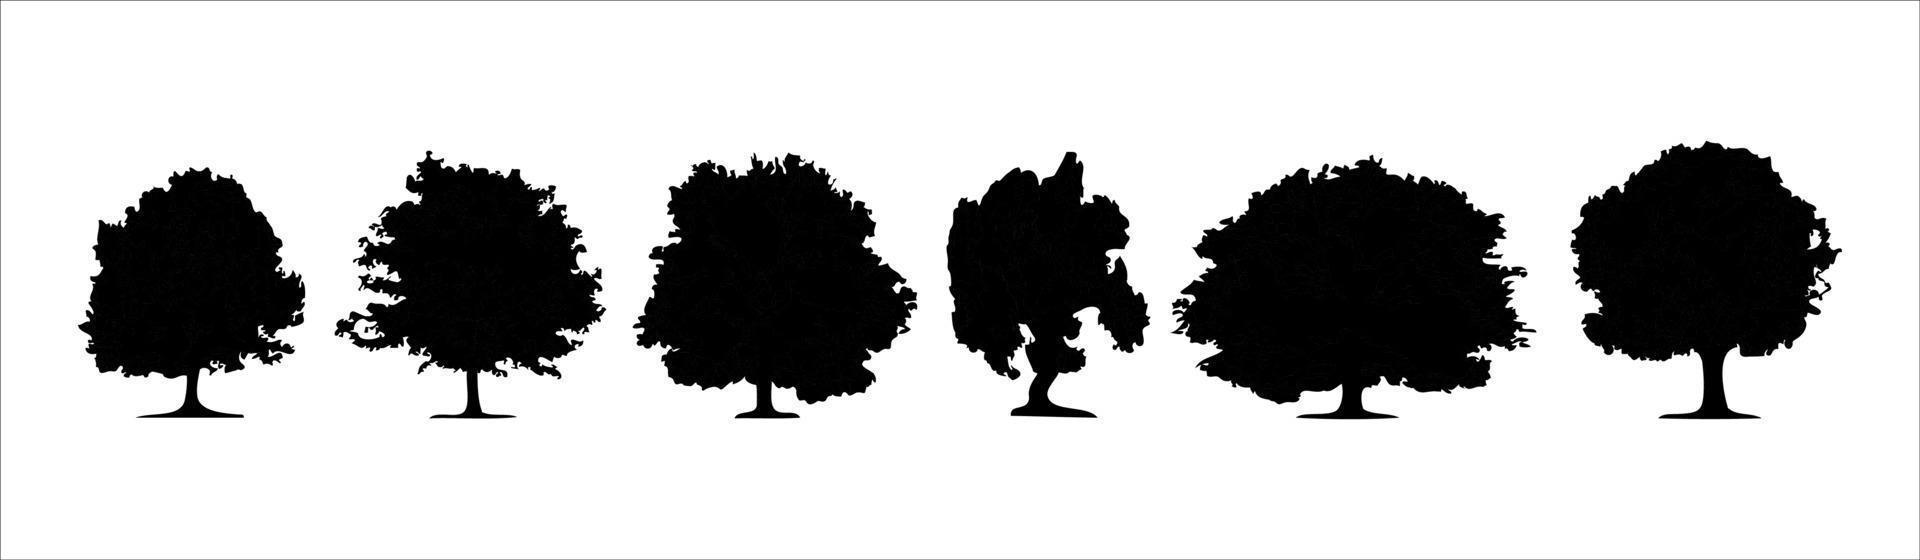 árvores silhuetas vetor eps 10